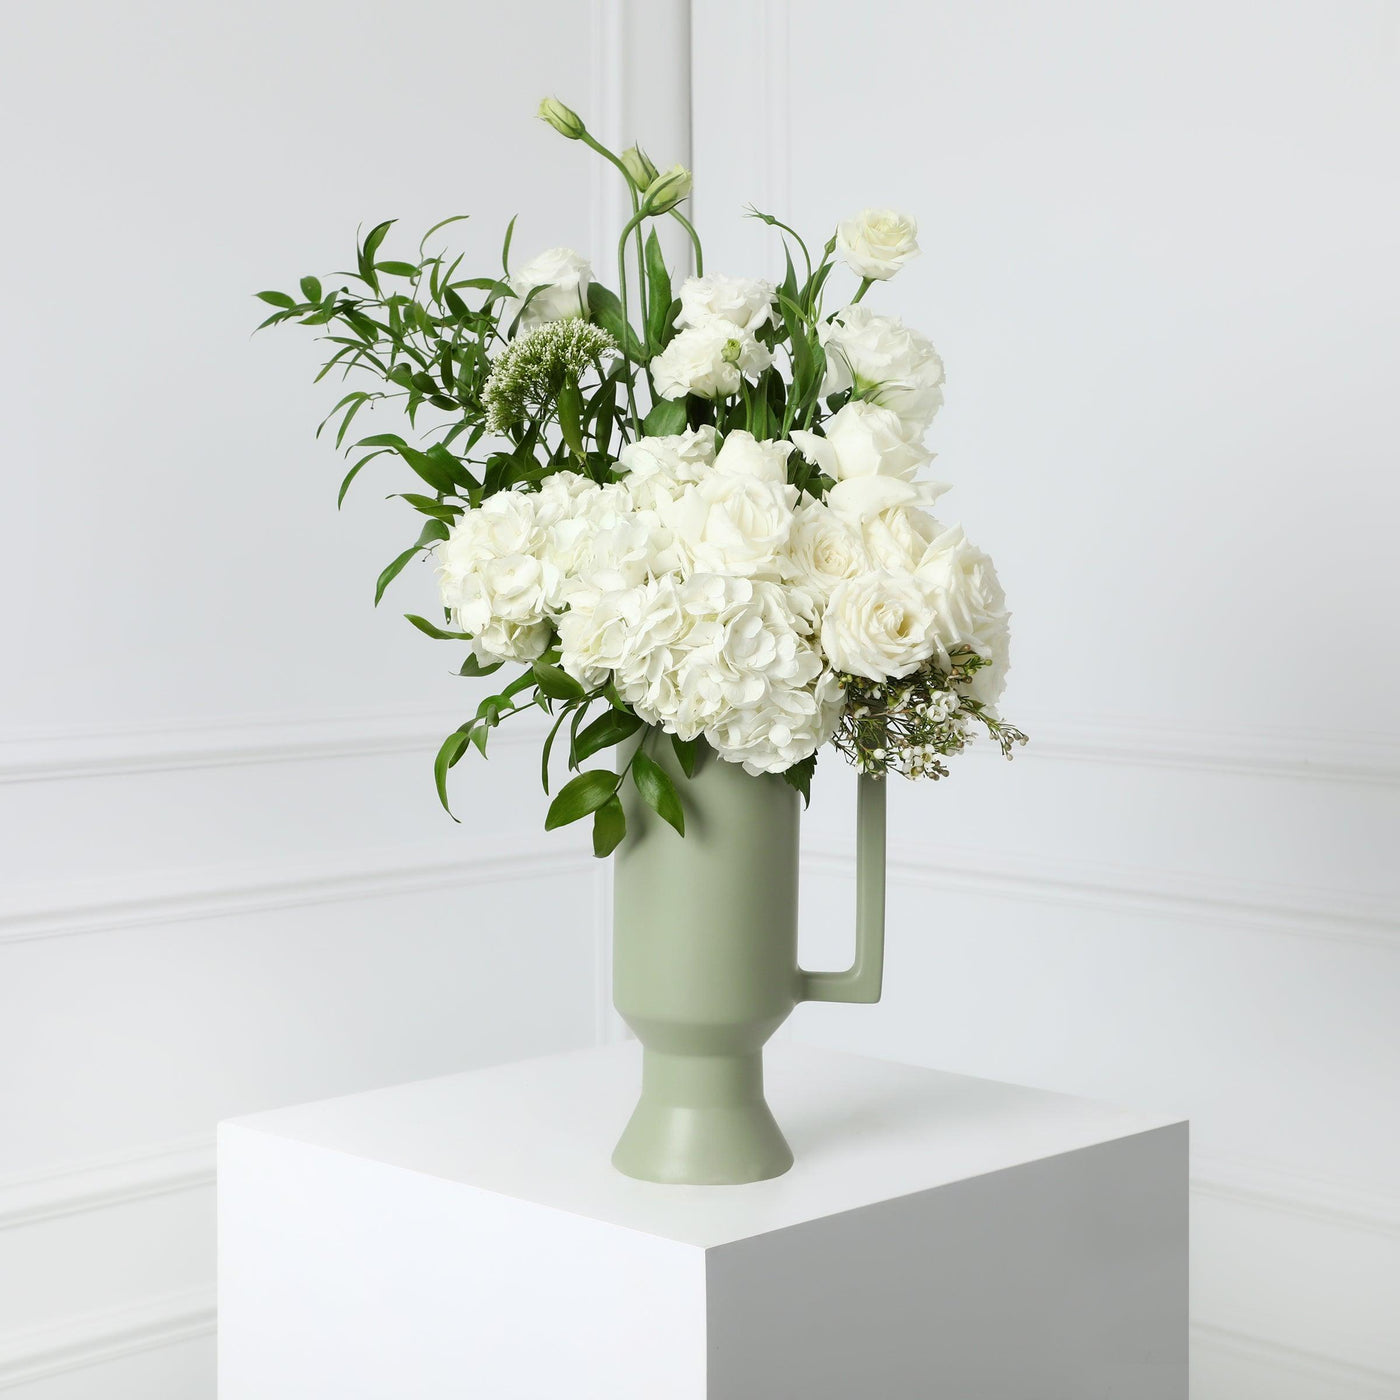 Amelia in a Green Ceramic Vase - Fresh Flowers - BLACK AND BLANC